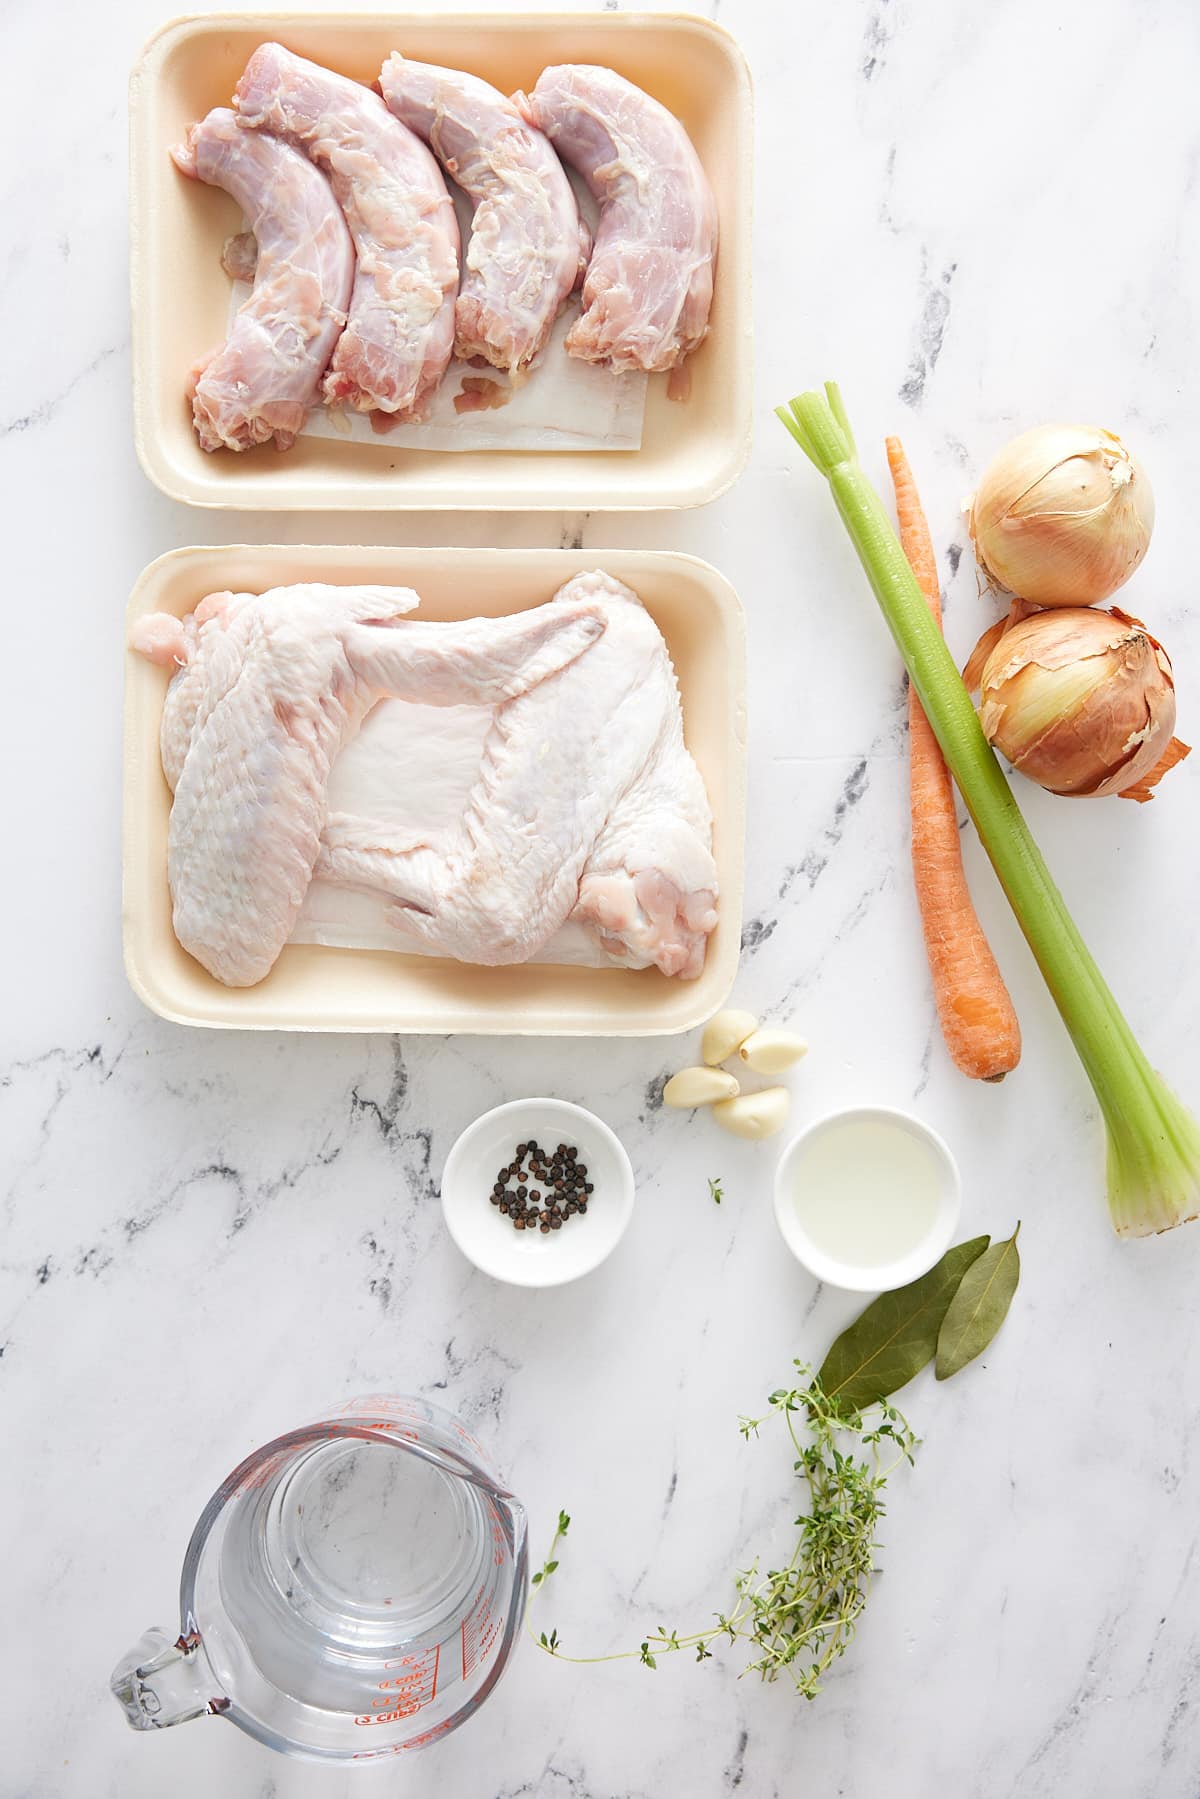 Turkey broth ingredients including turkey wings and neck, vegetables, herbs and seasoning